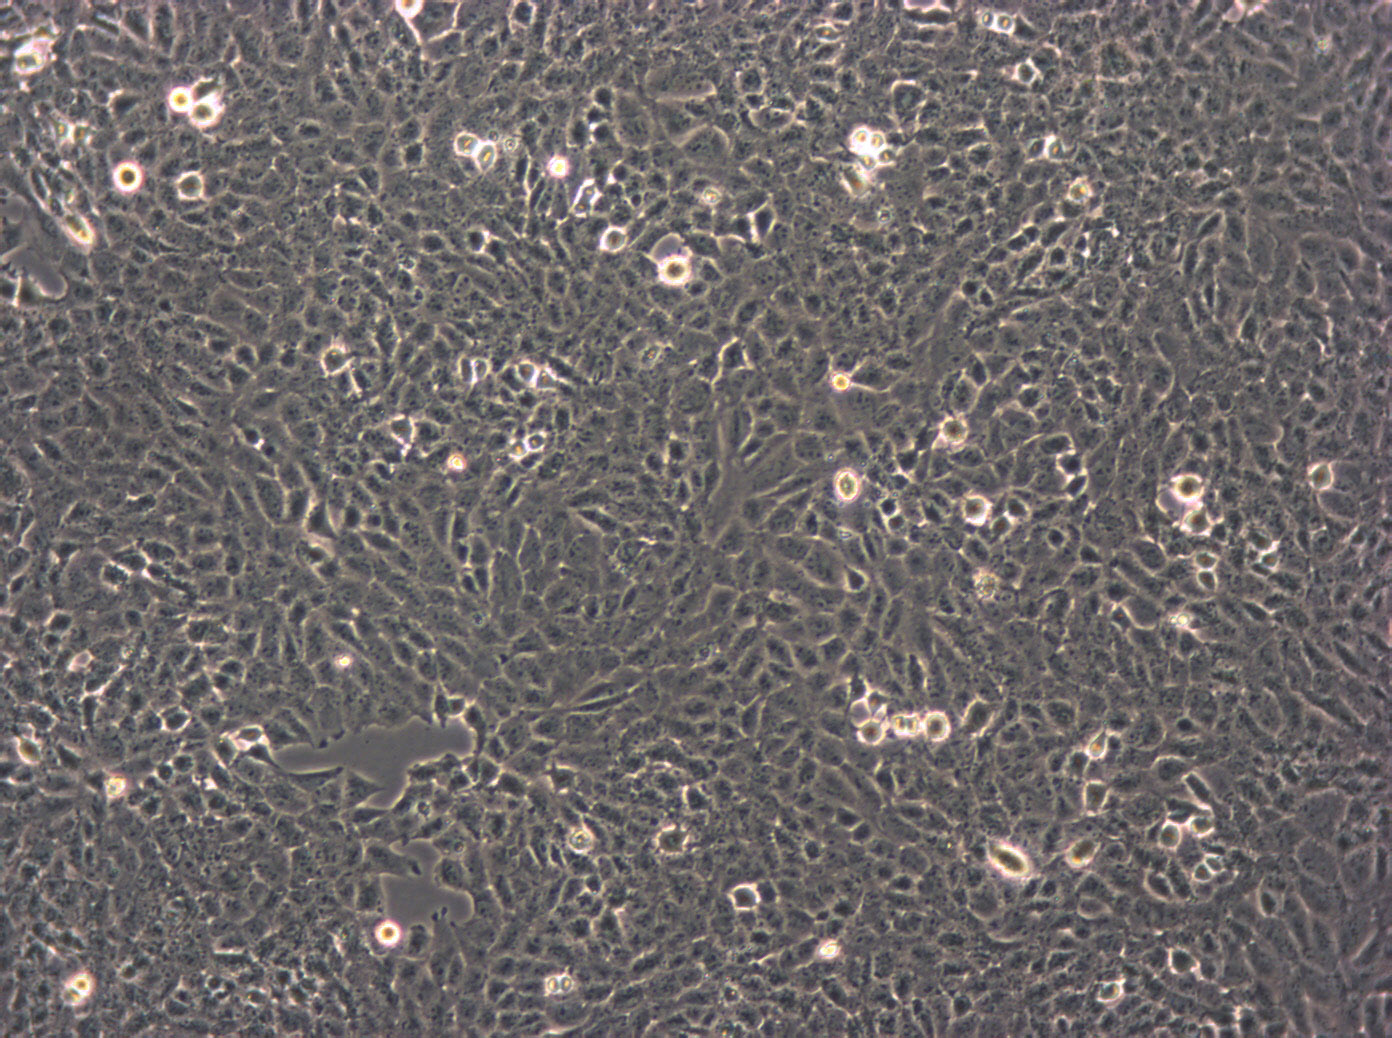 Psi2 DAP Thawing小鼠胚胎成纤维细胞系